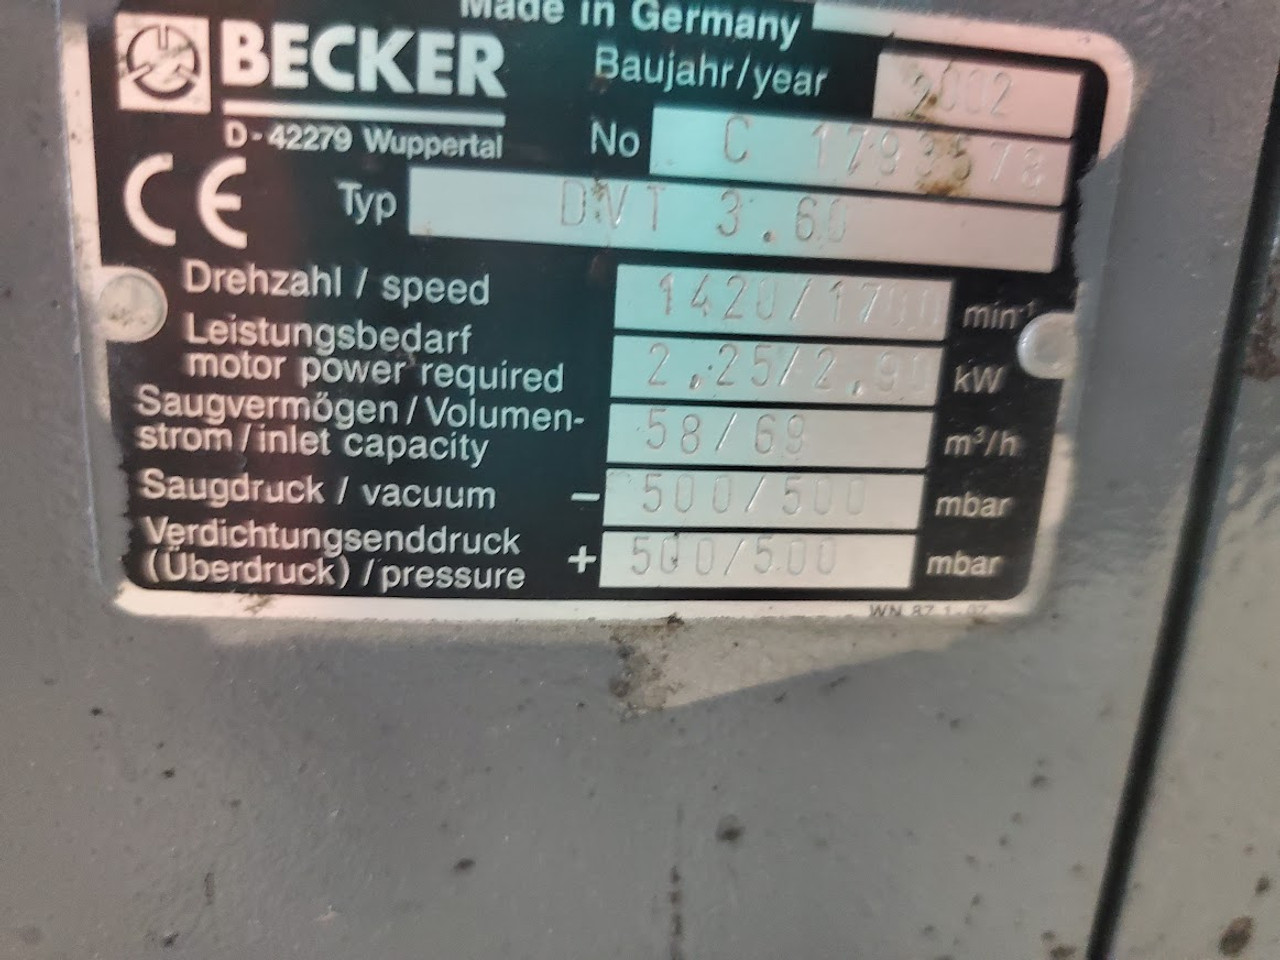 Becker 2002 2.25/2.9 kW 58/69 m3/h Dry Pump DVT 3.6